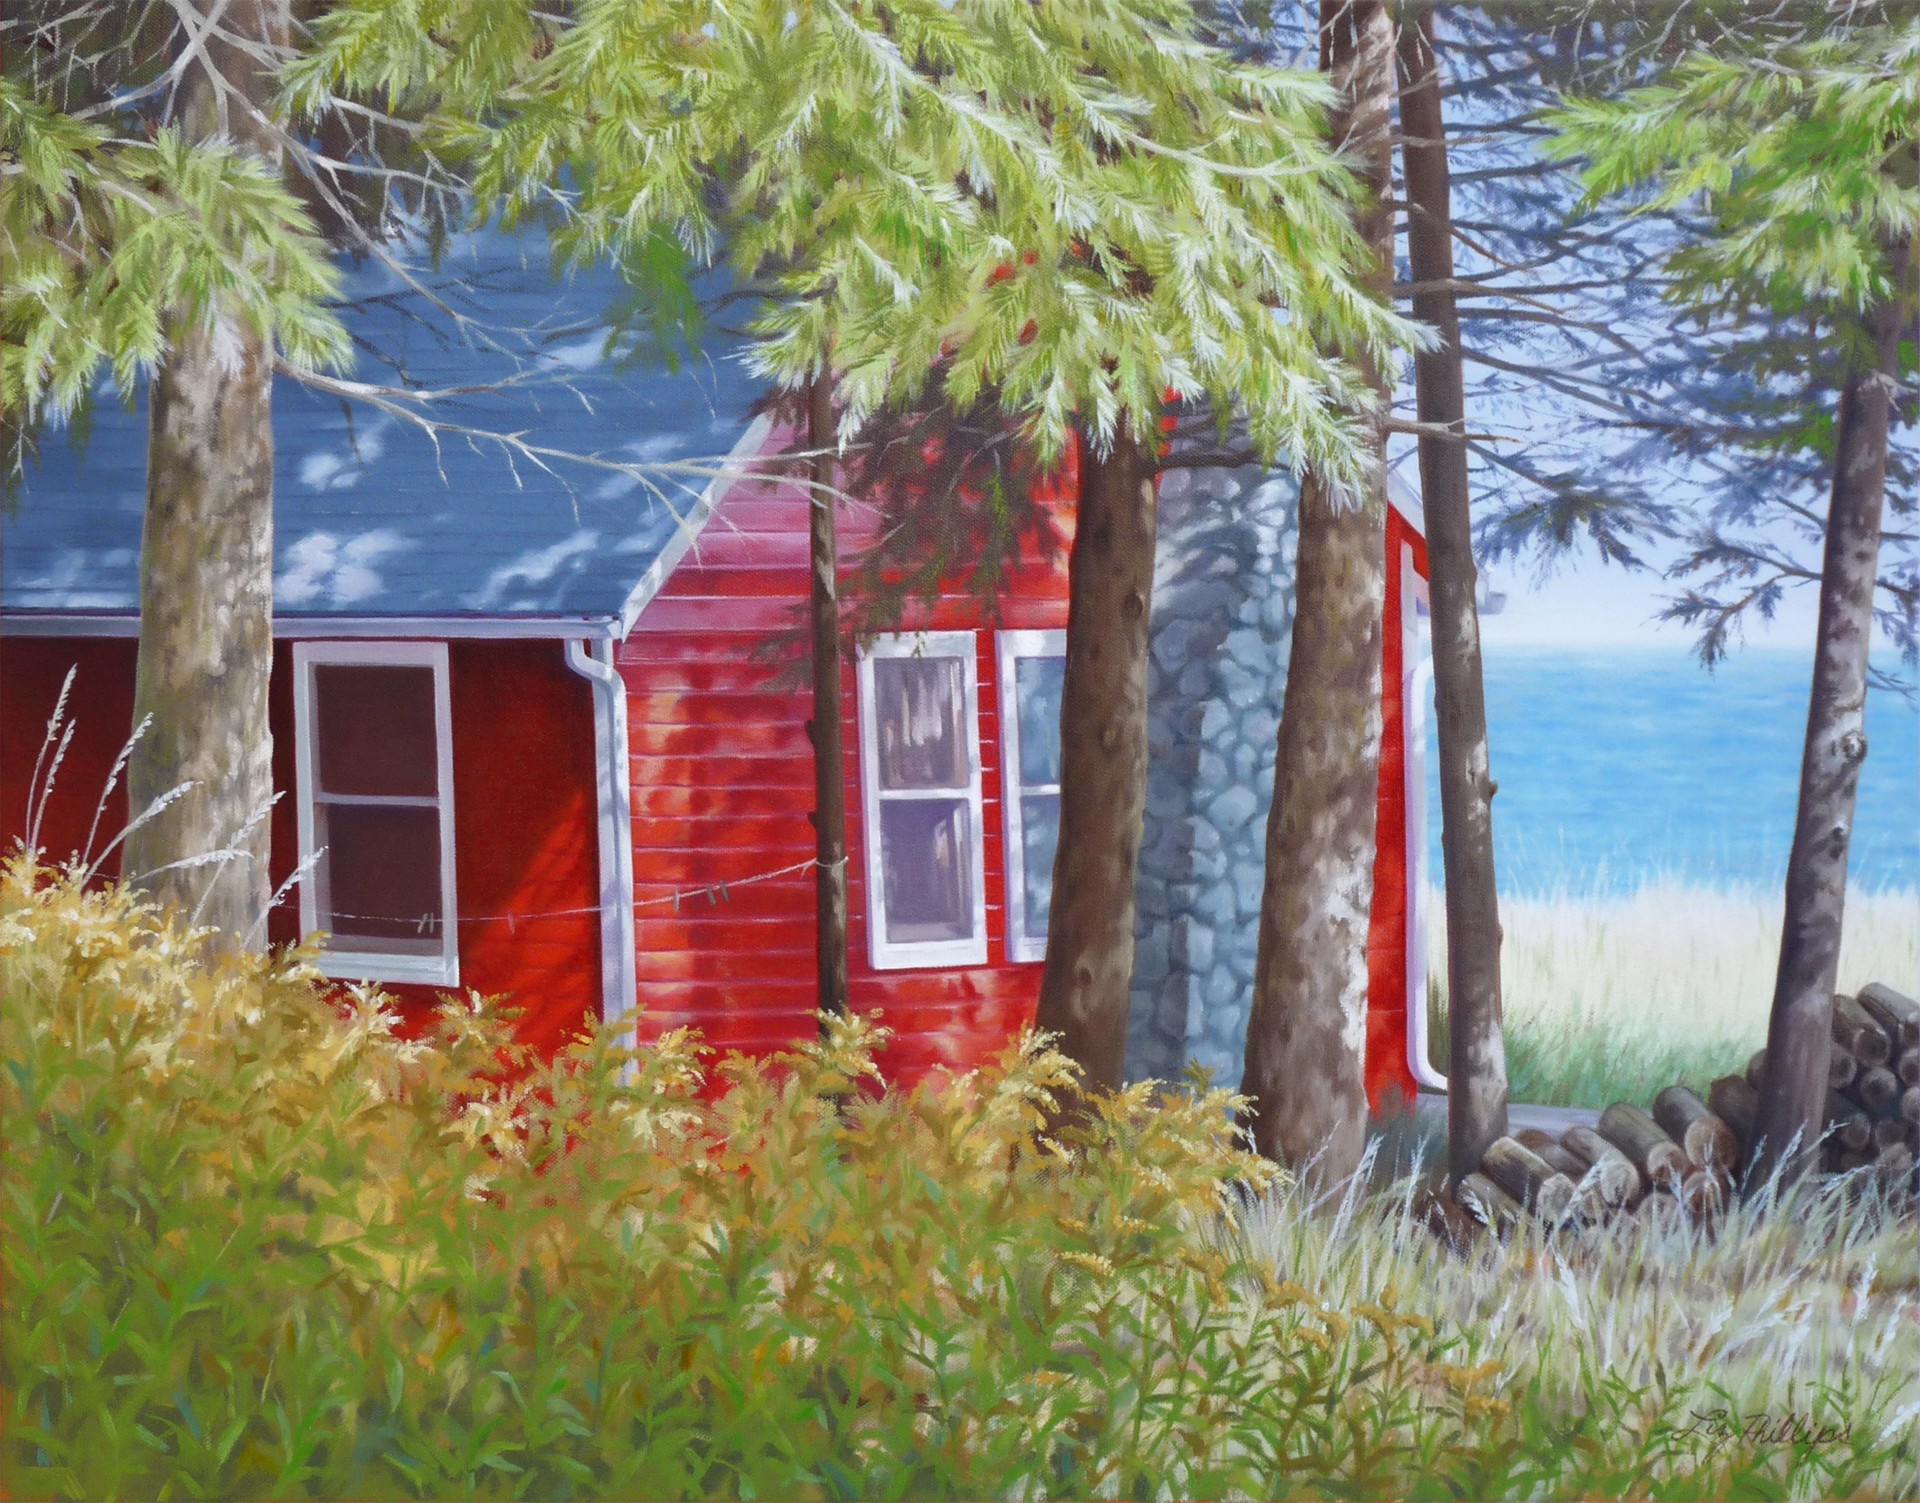 Little Red Cabin by Liz Phillips